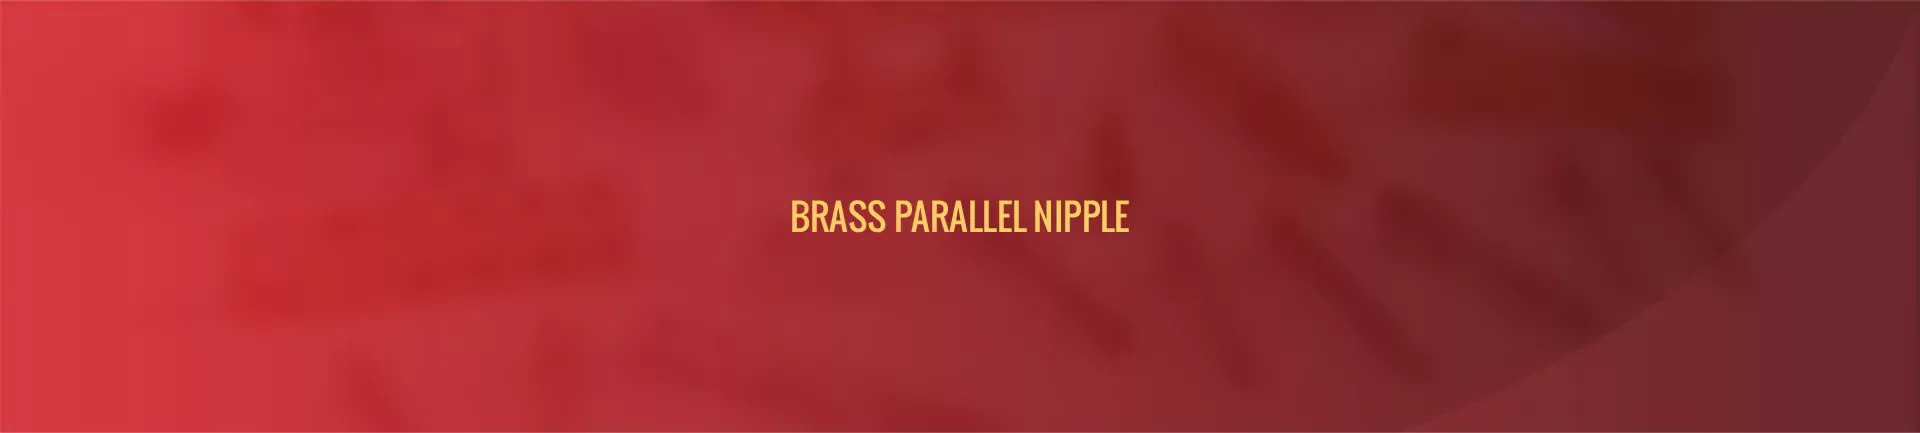 brass_parallel_nipple-banner